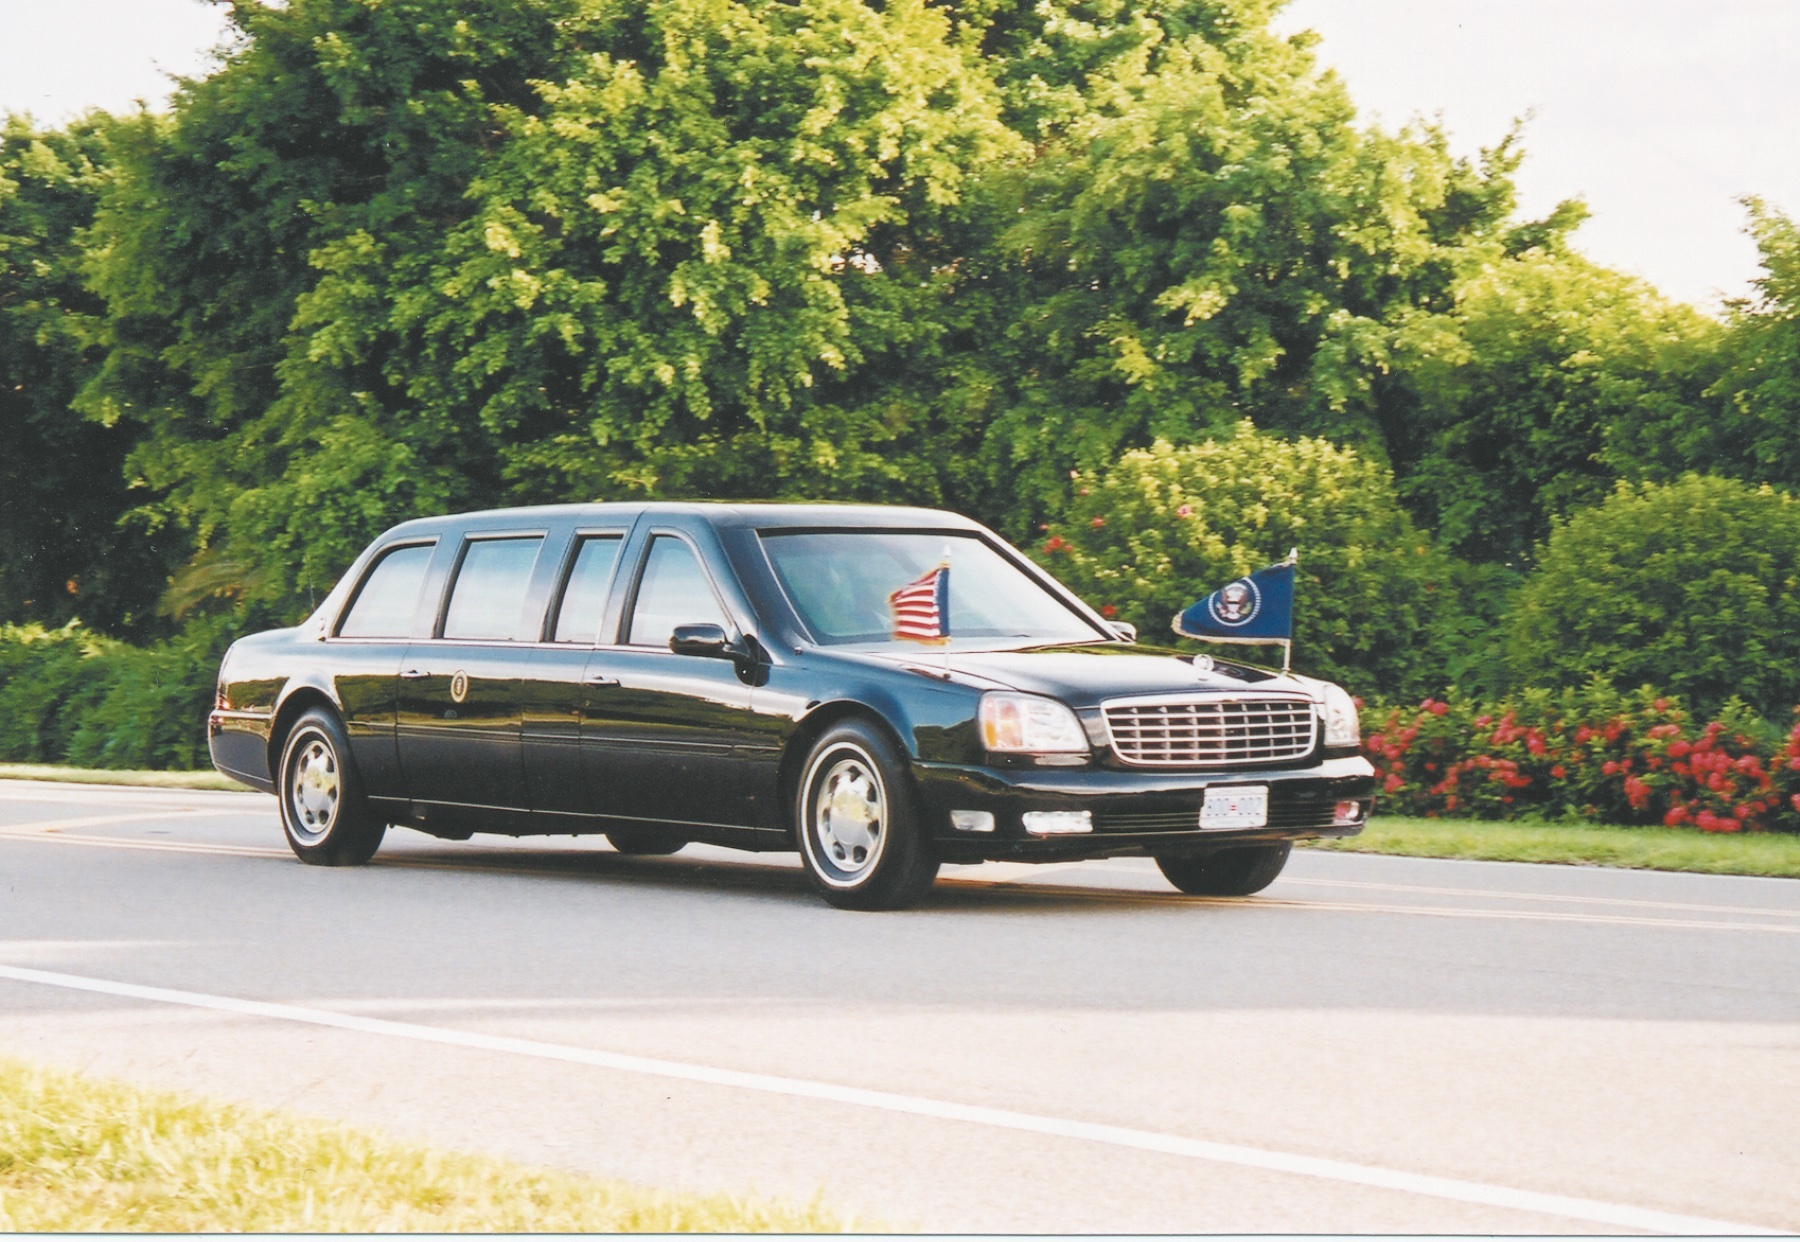 The presidential limo leaves Longboat Key for Emma Booker Elementary. 